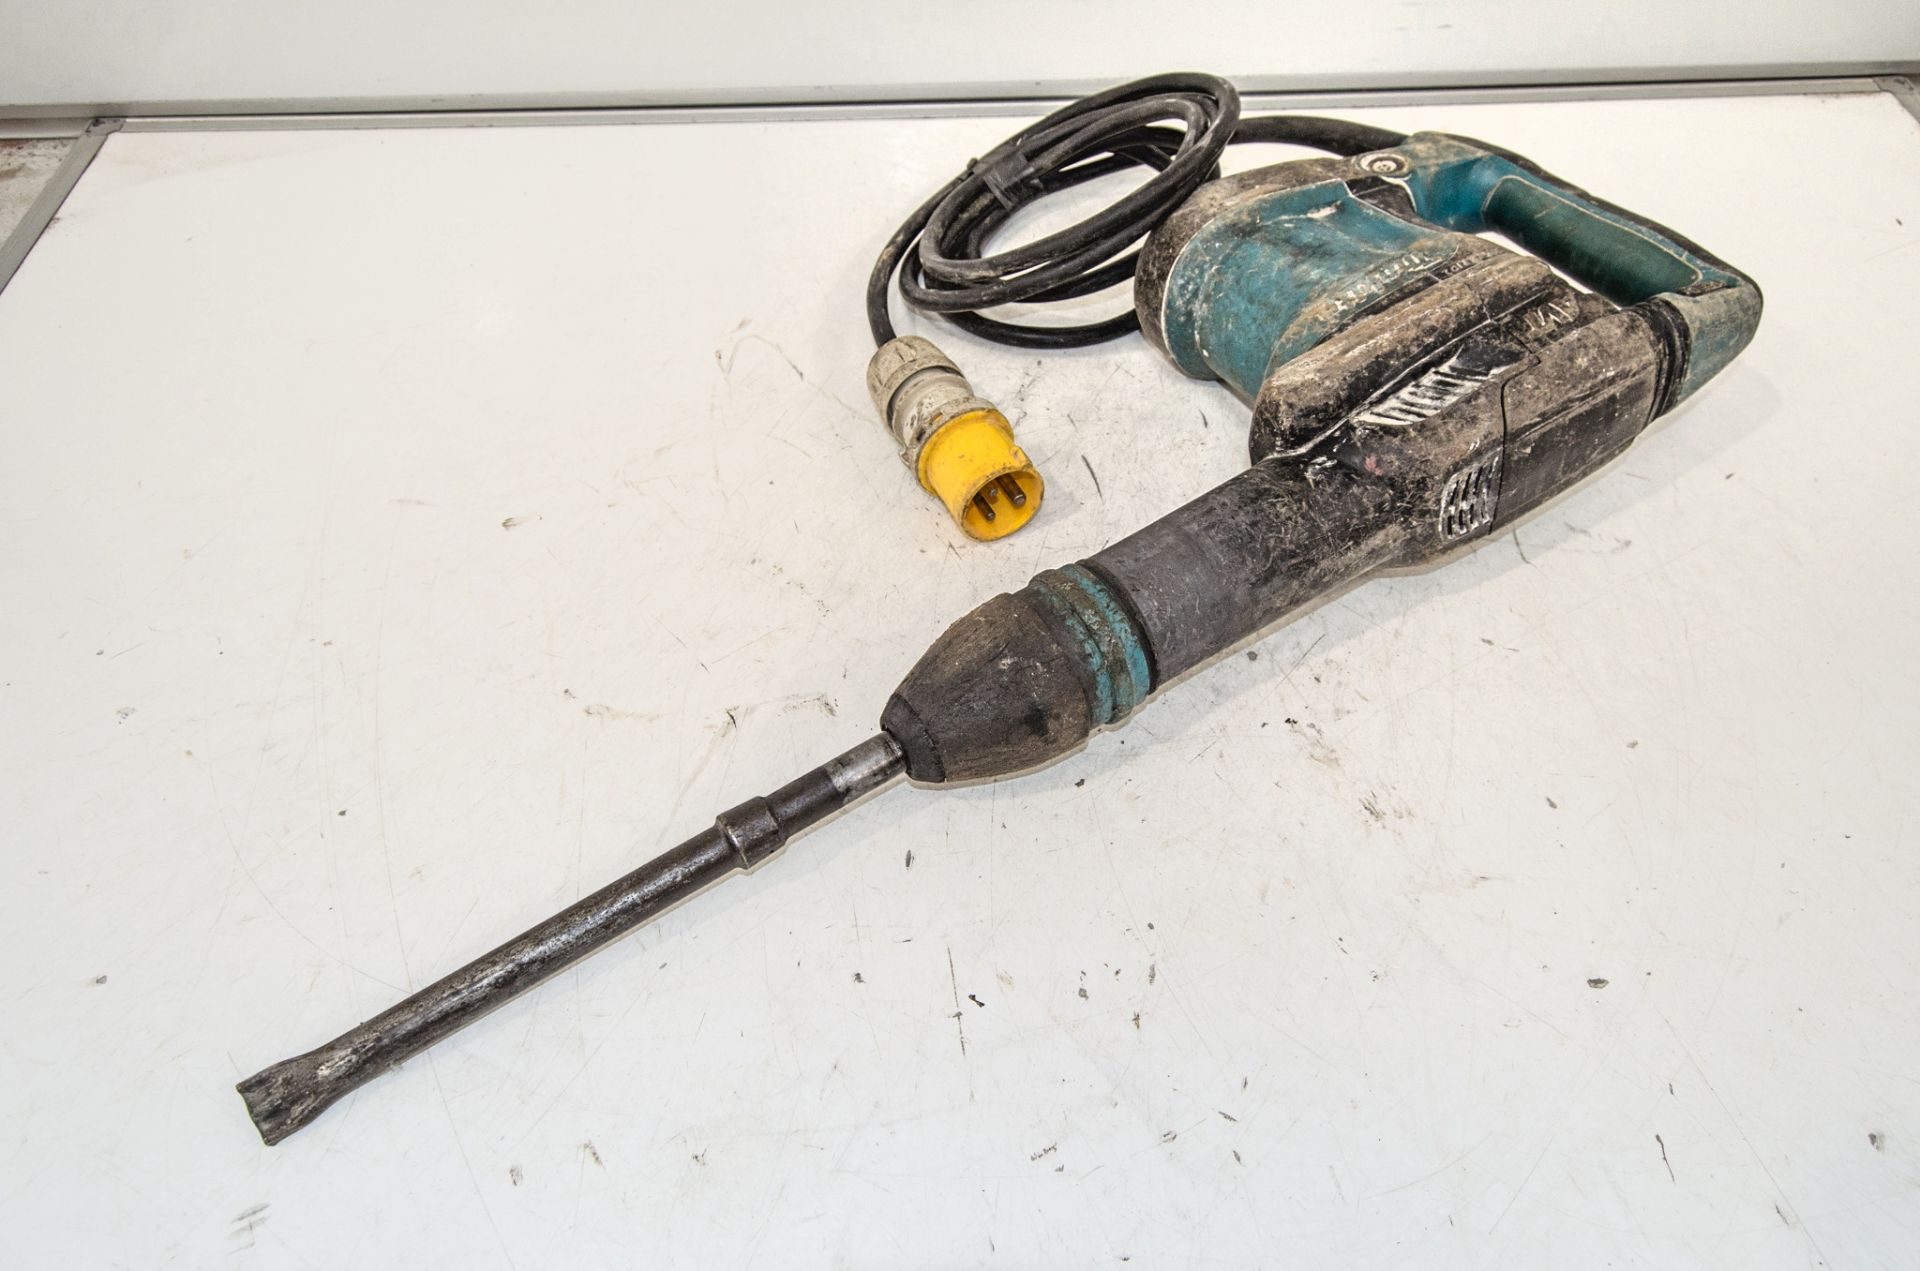 Makita HM0871C 110v SDS rotary hammer drill 08182102 - Image 2 of 2